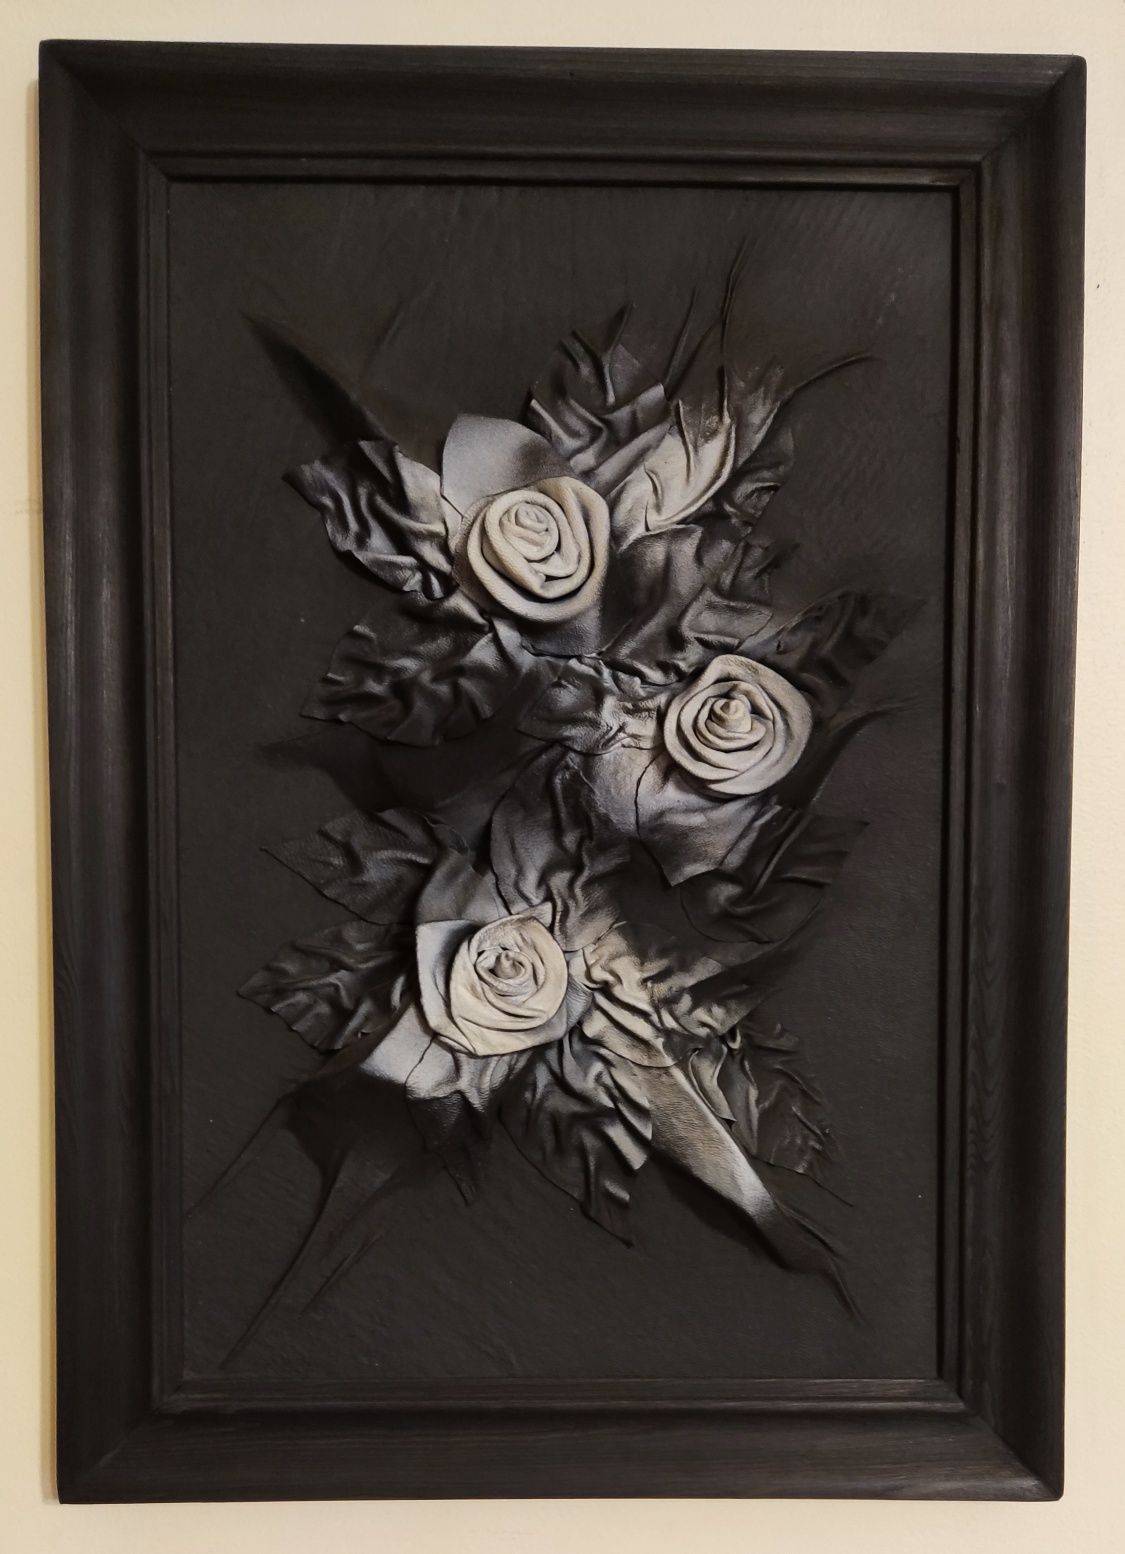 Obraz ze skóry 3D róże czarno biały